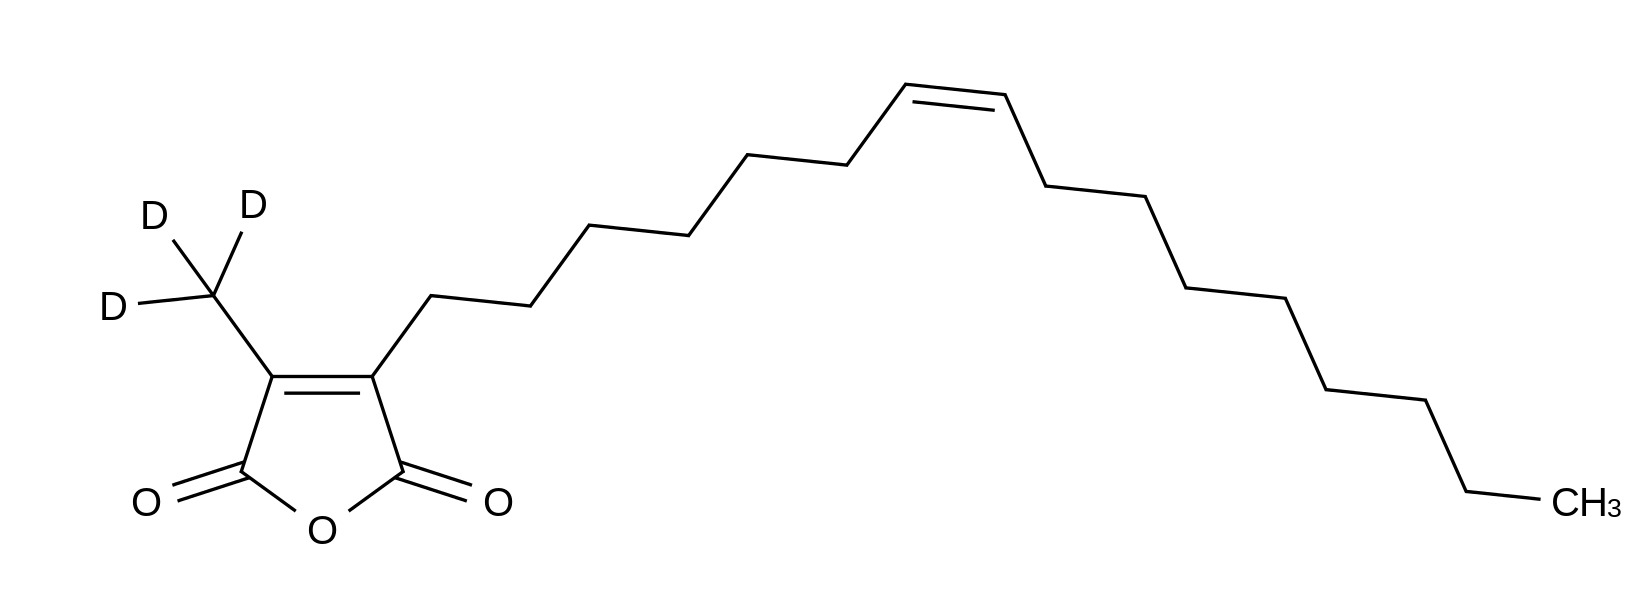 Chaetomellic Acid B Anhydride-d<sub>3</sub>